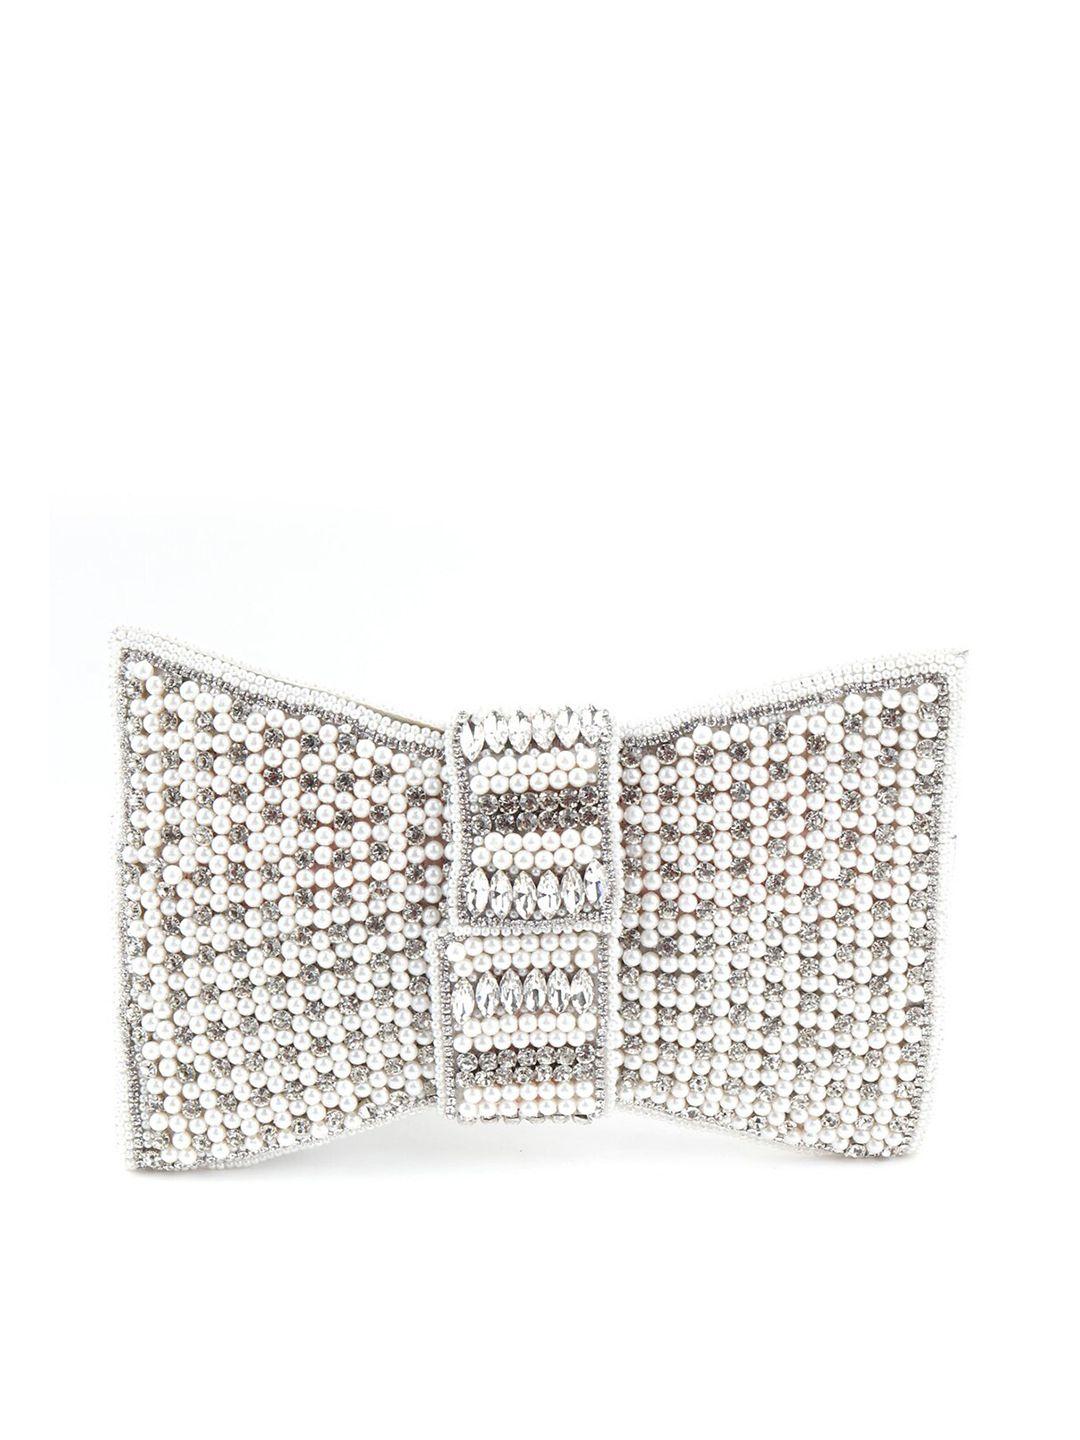 odette white & silver-toned rhinestone embellished purse clutch